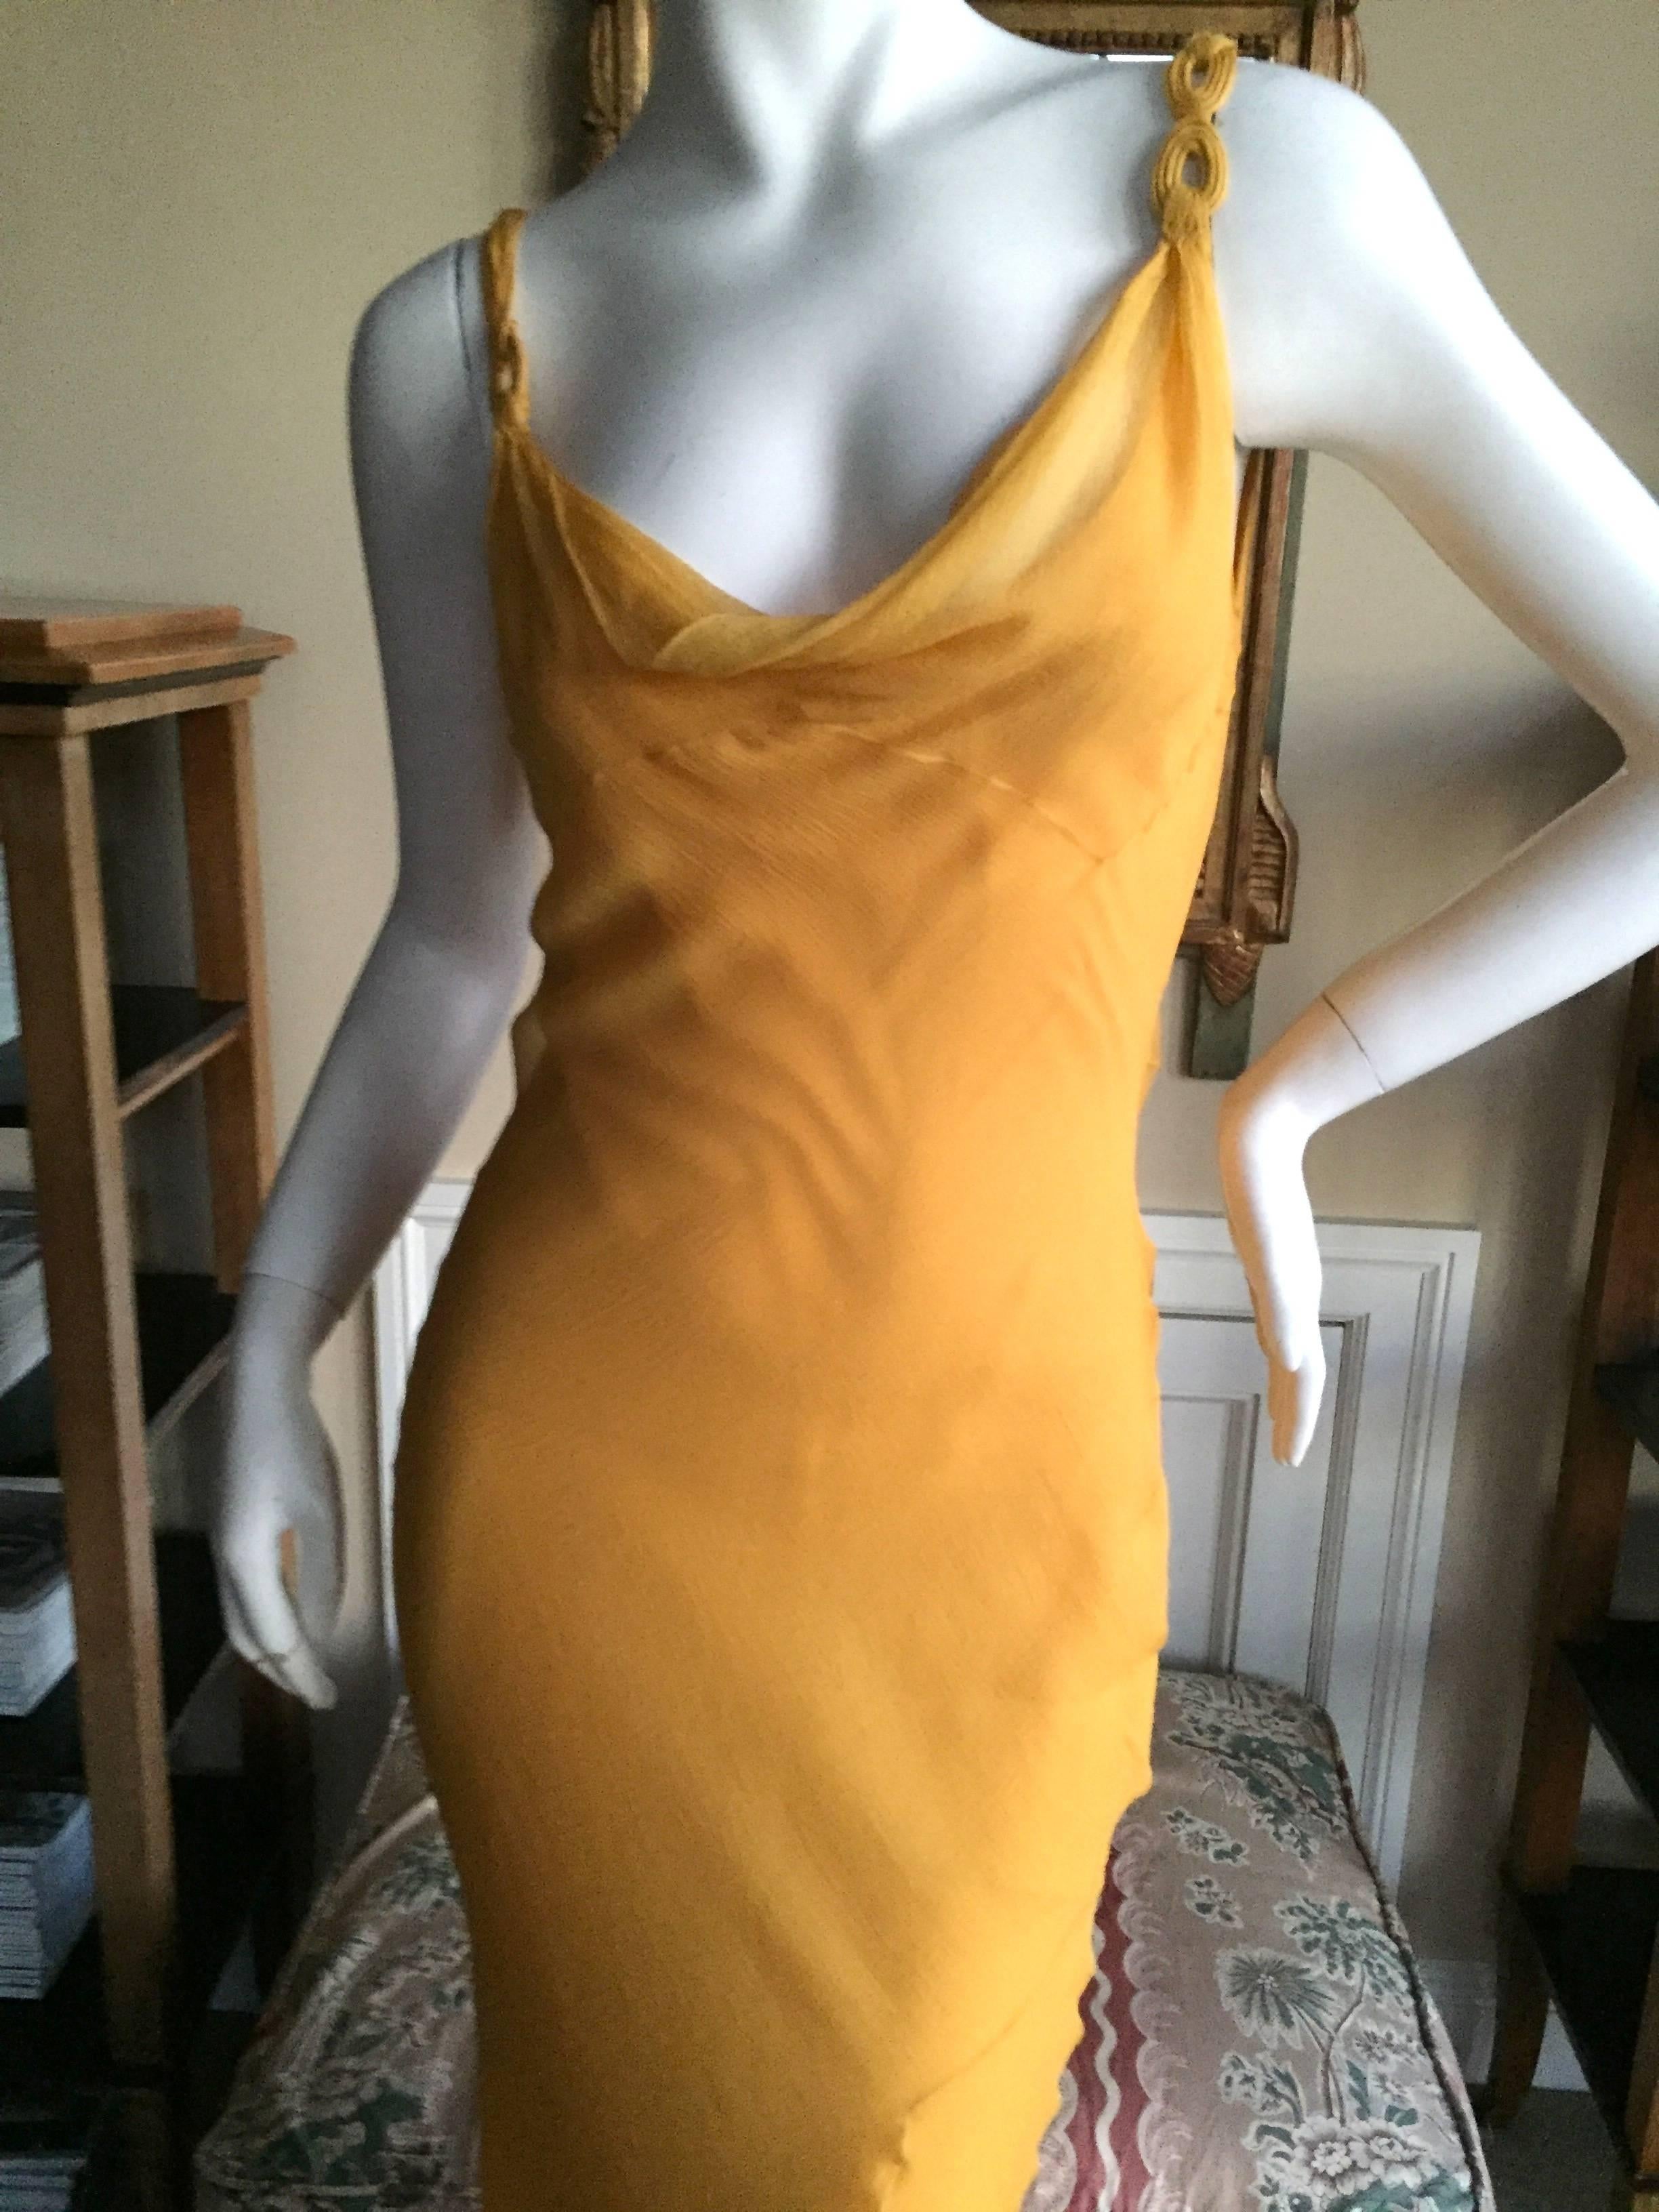 Beautiful bias cut silk chiffon dress in a rich marigold orange from John Galliano.
Size 38
Bust 38